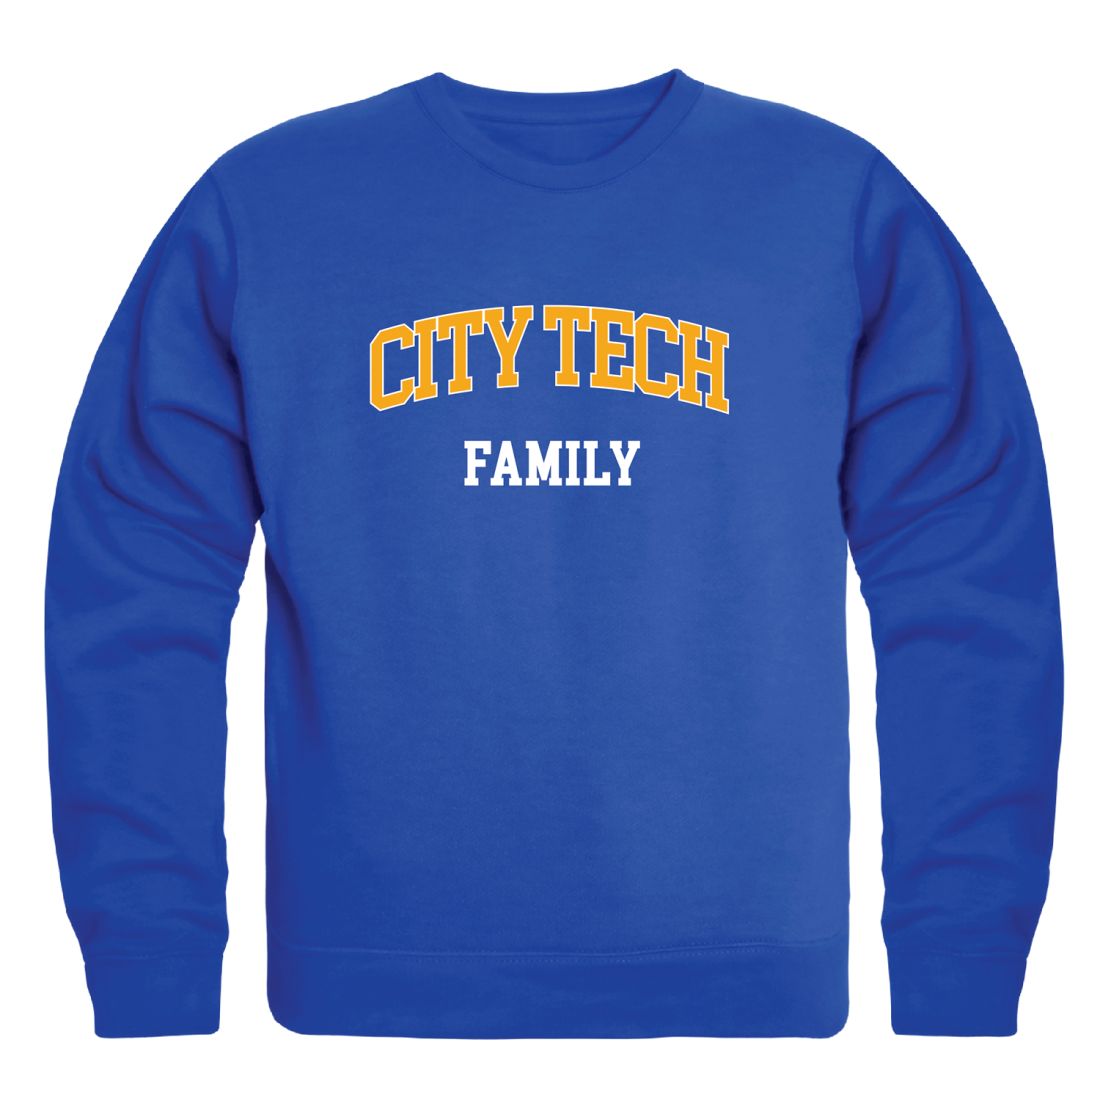 New-York-City-College-of-Technology-Yellow-Jackets-Family-Fleece-Crewneck-Pullover-Sweatshirt